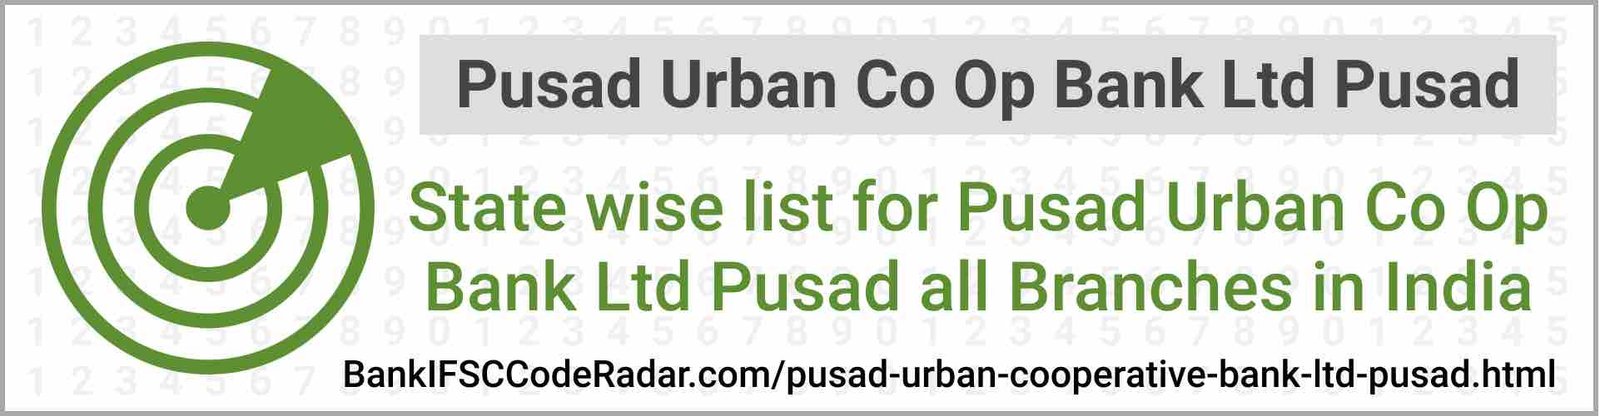 Pusad Urban Cooperative Bank Ltd Pusad All Branches India